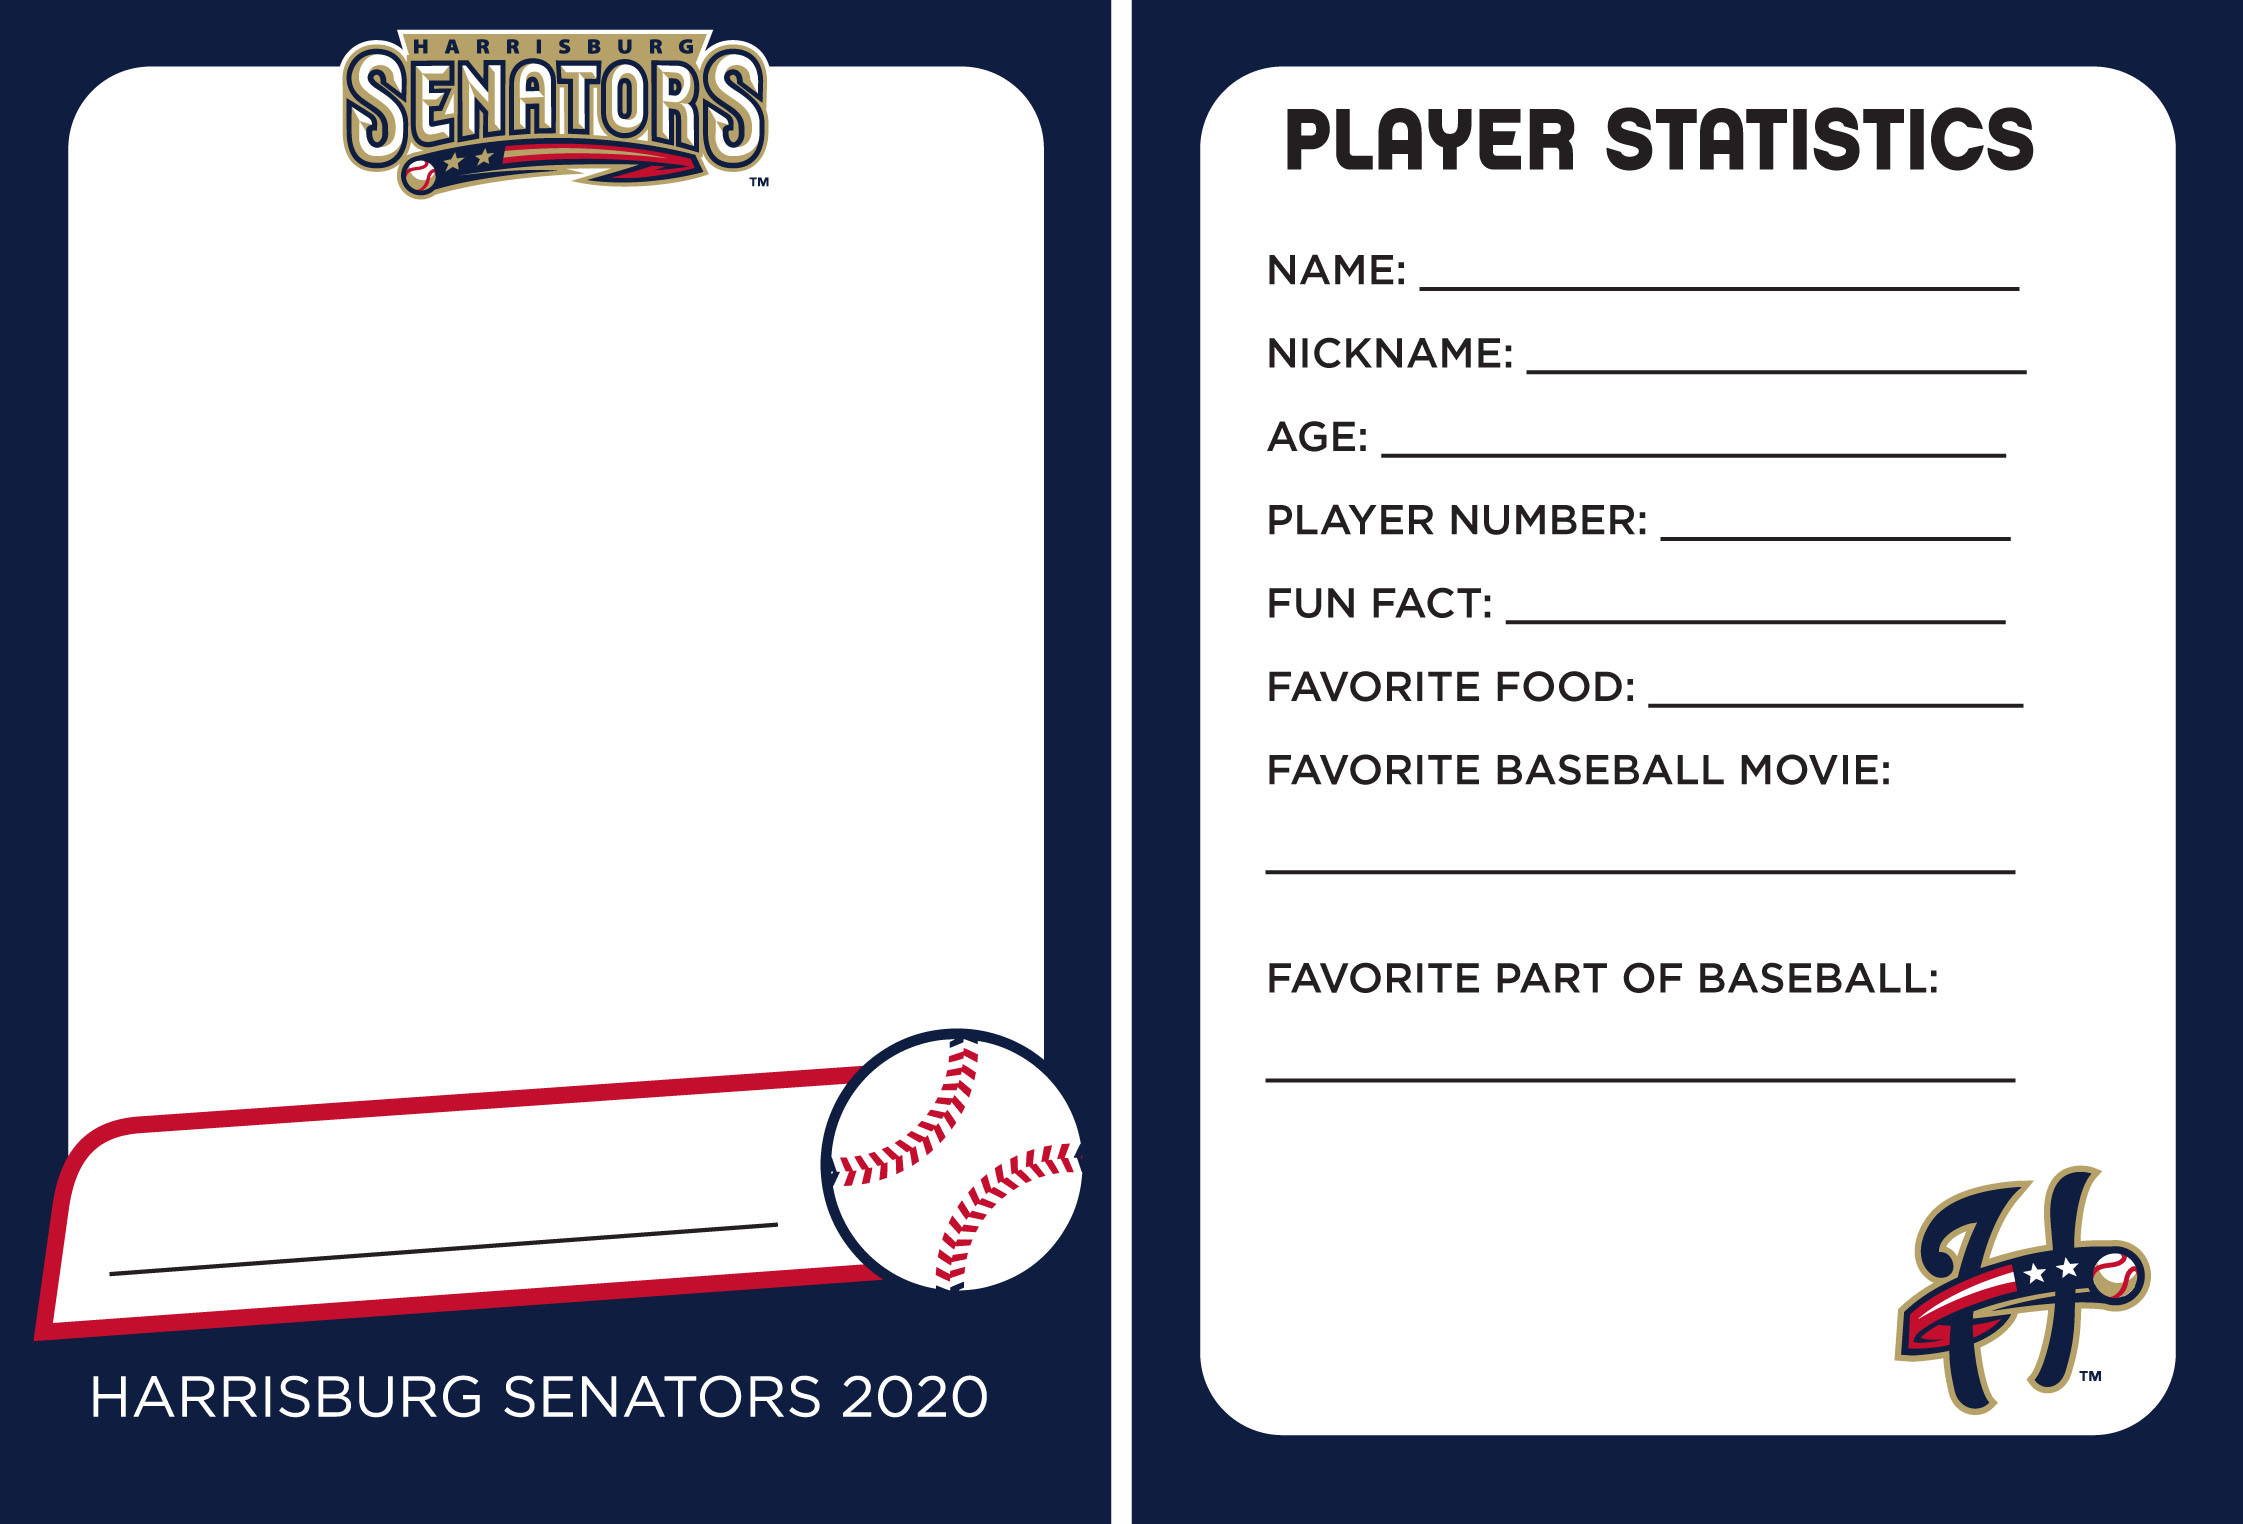 Harrisburg Senators on X: Design your own baseball card! What